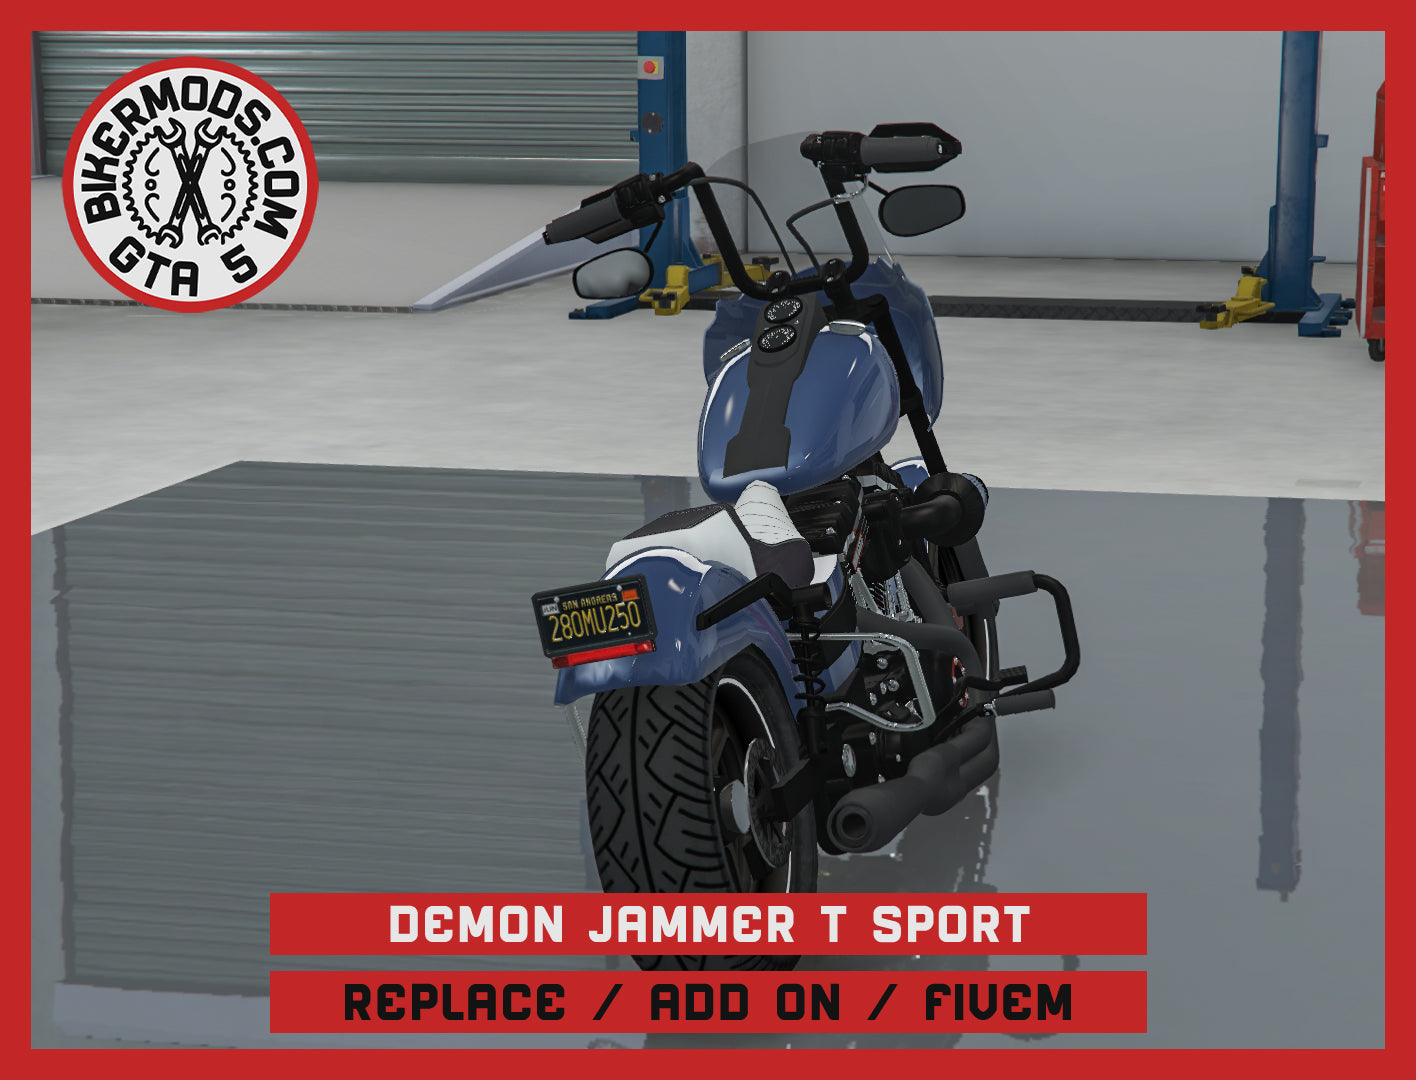 Demon Jammer T Sport (Replace / Add On / FiveM 234k Poly